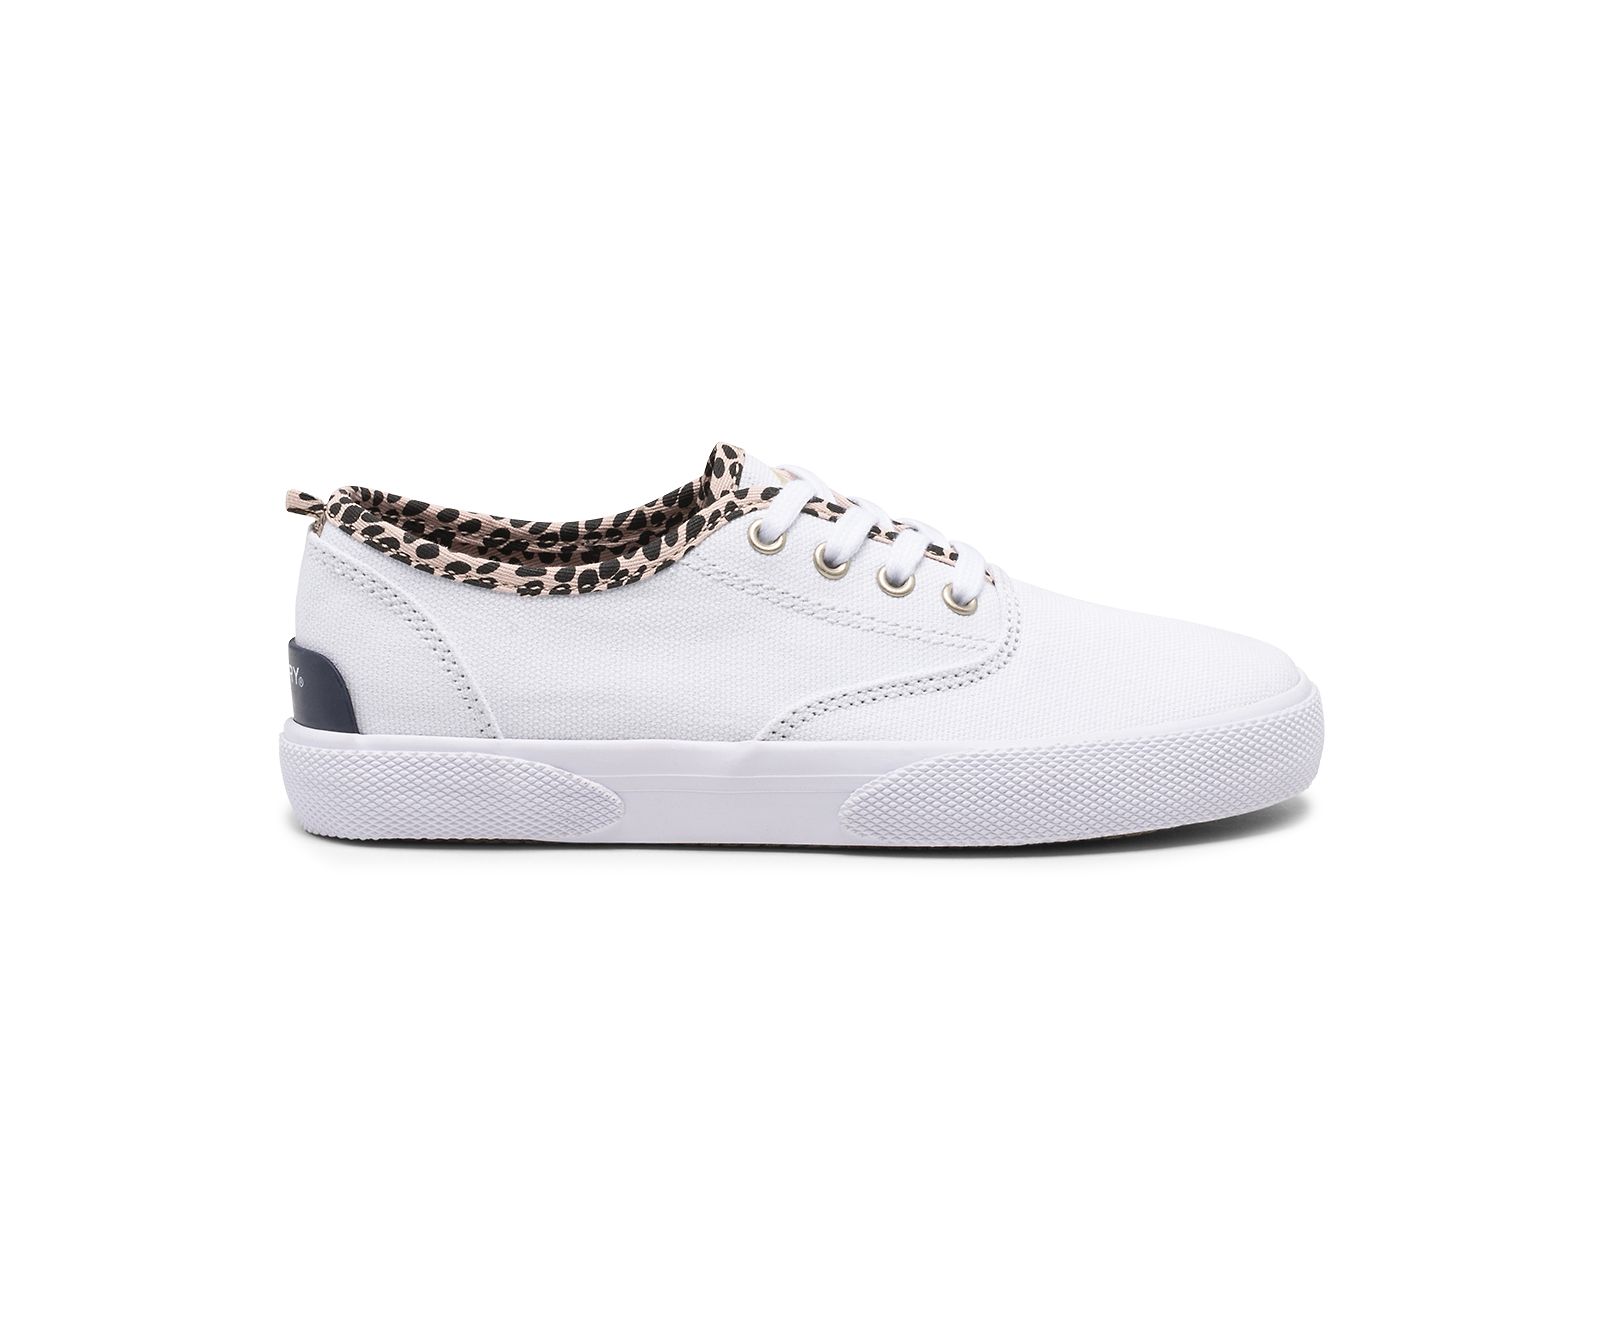 Big Kid's Pier Wave CVO Washable Sneaker - White/Leopard